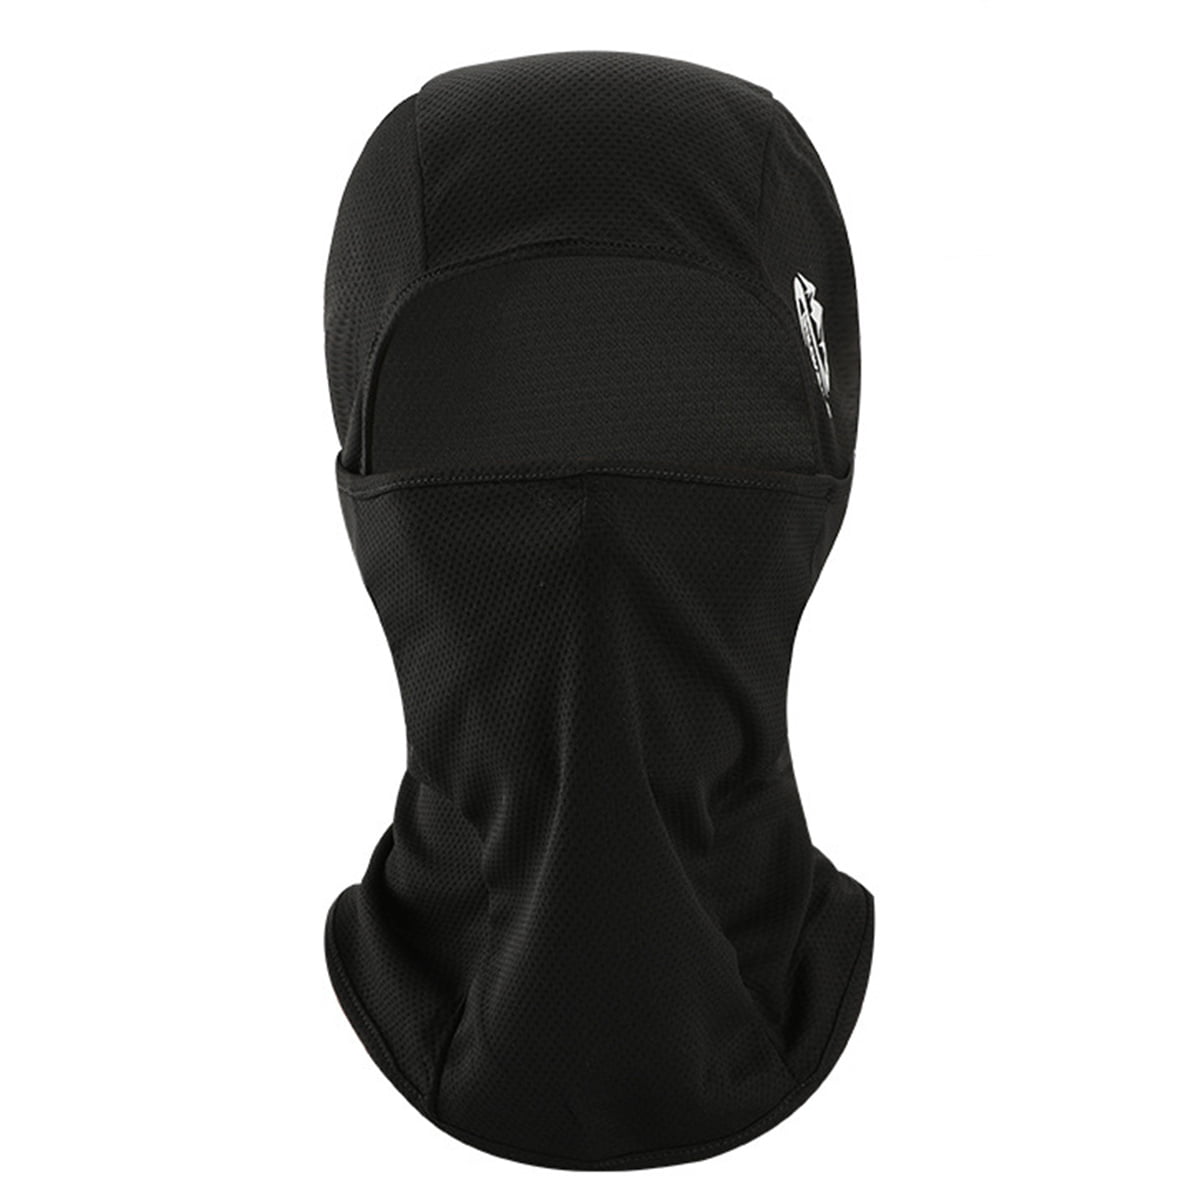 Details about   Balaclava Face Mask UV Protection Ski Sun Hood Tactical Masks for Men Women Camo 